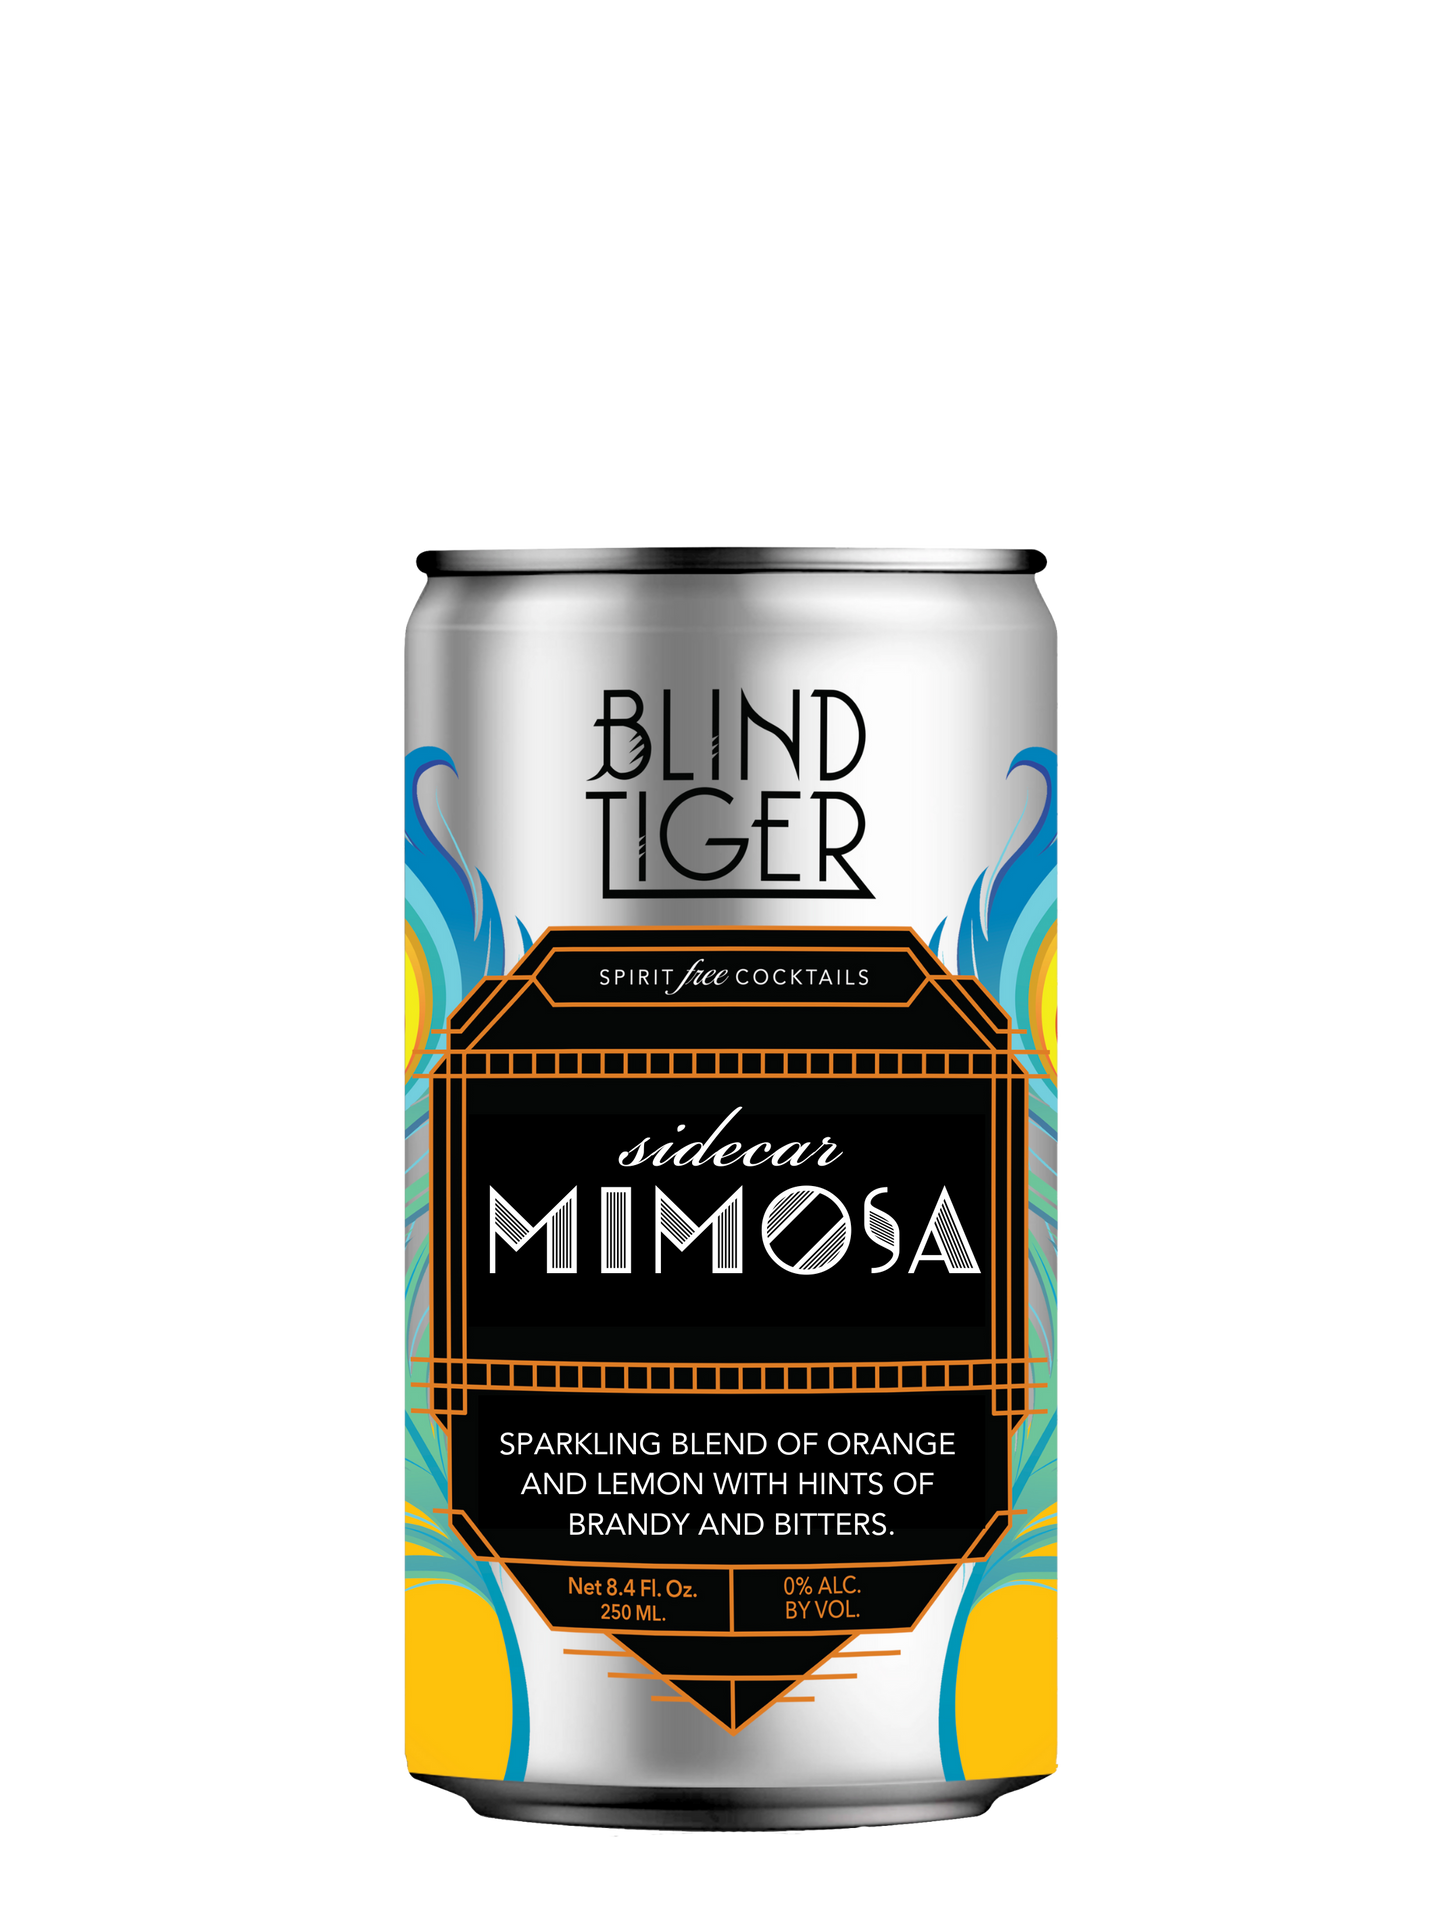 NEW Blind Tiger Variety 4-Pack - Slim Cans (33.6oz)